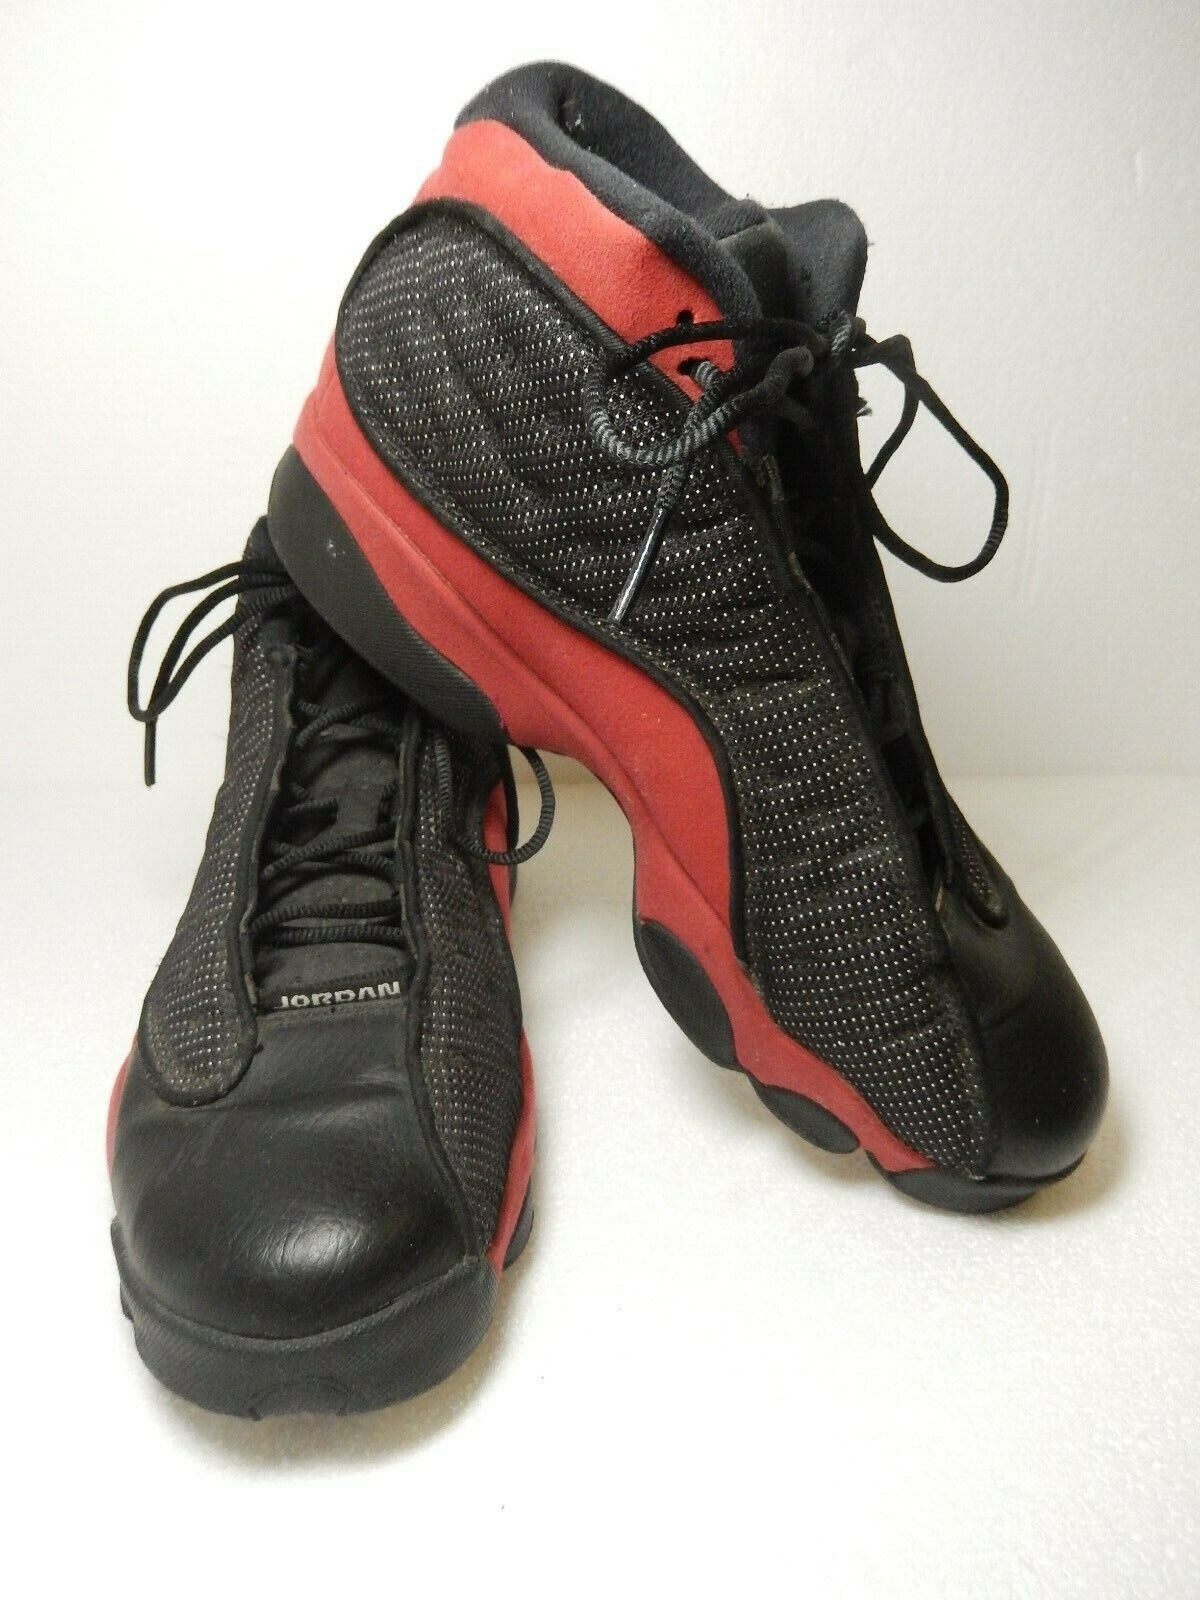 Nike Air Jordan XIII 13 Retro Bred 2012 Black/Varsity Red Size 7 Y 414574-010